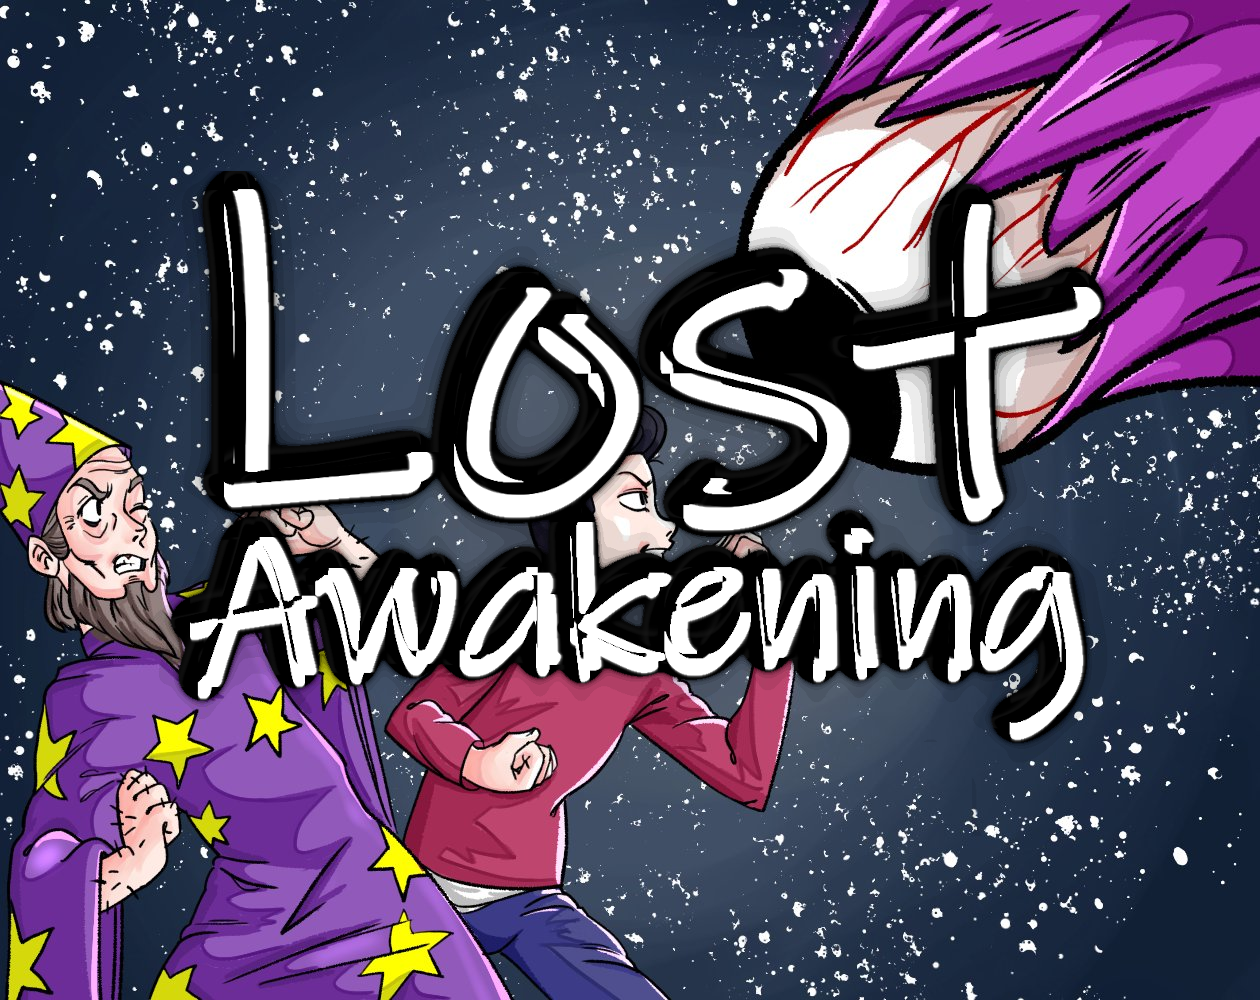 Lost Awakening, Chapter 2 Presskit Image